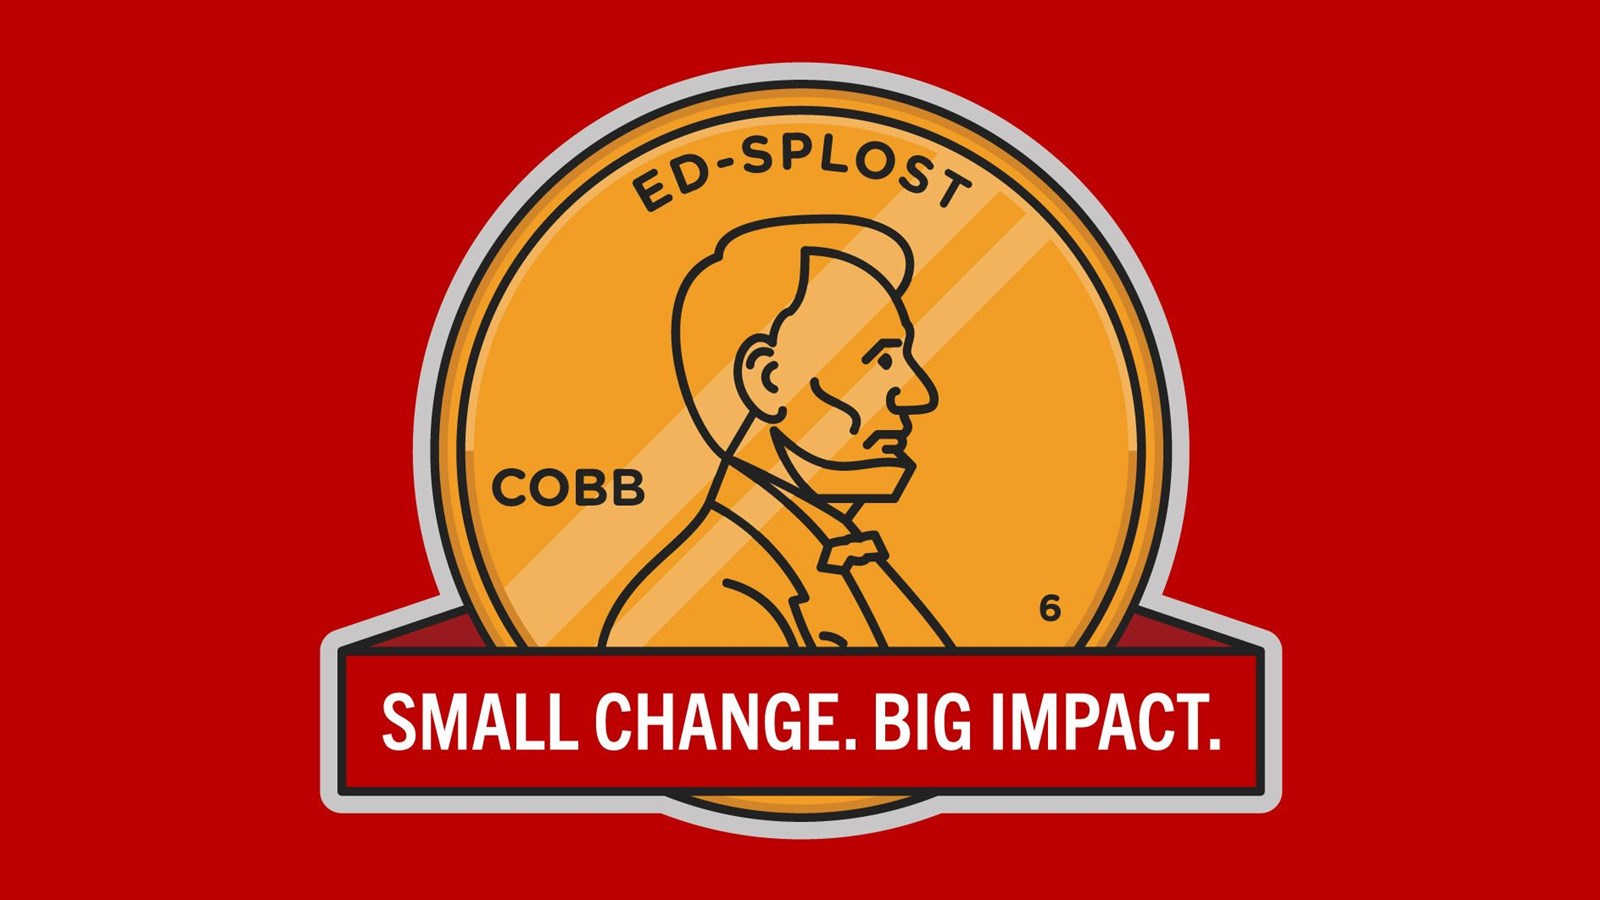 Small Change. Big Impact. Ed-SPLOST.